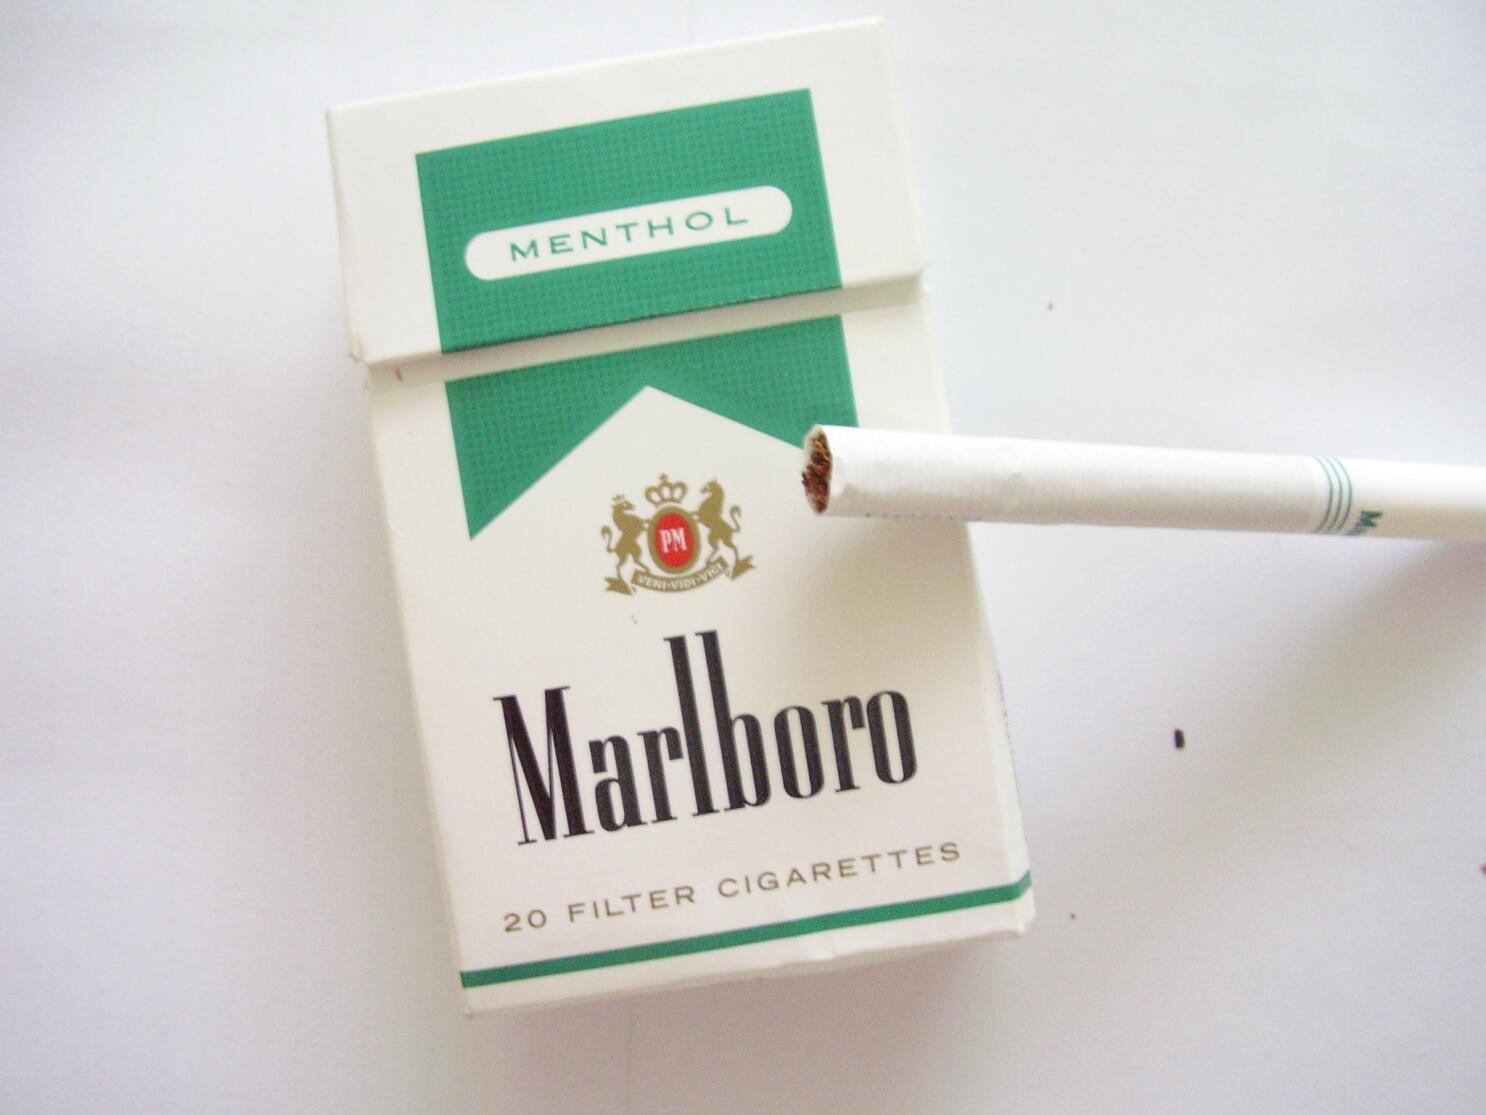 Aspirational' Brand Marlboro Expands Lineup To Counter Ciggie